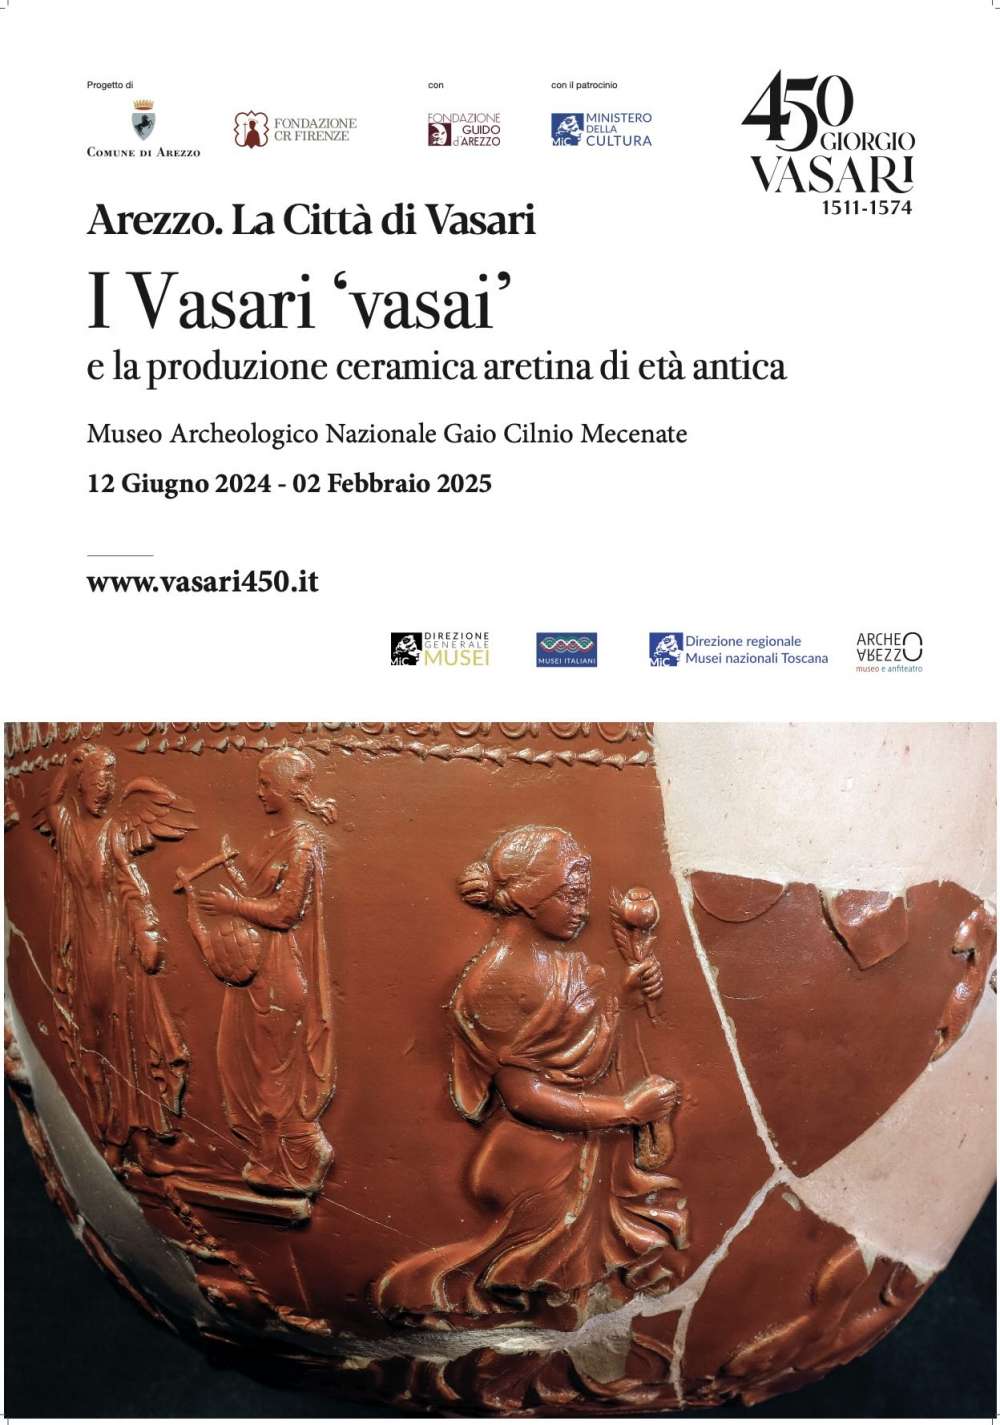 I Vasari “vasai” raccontati in una mostra